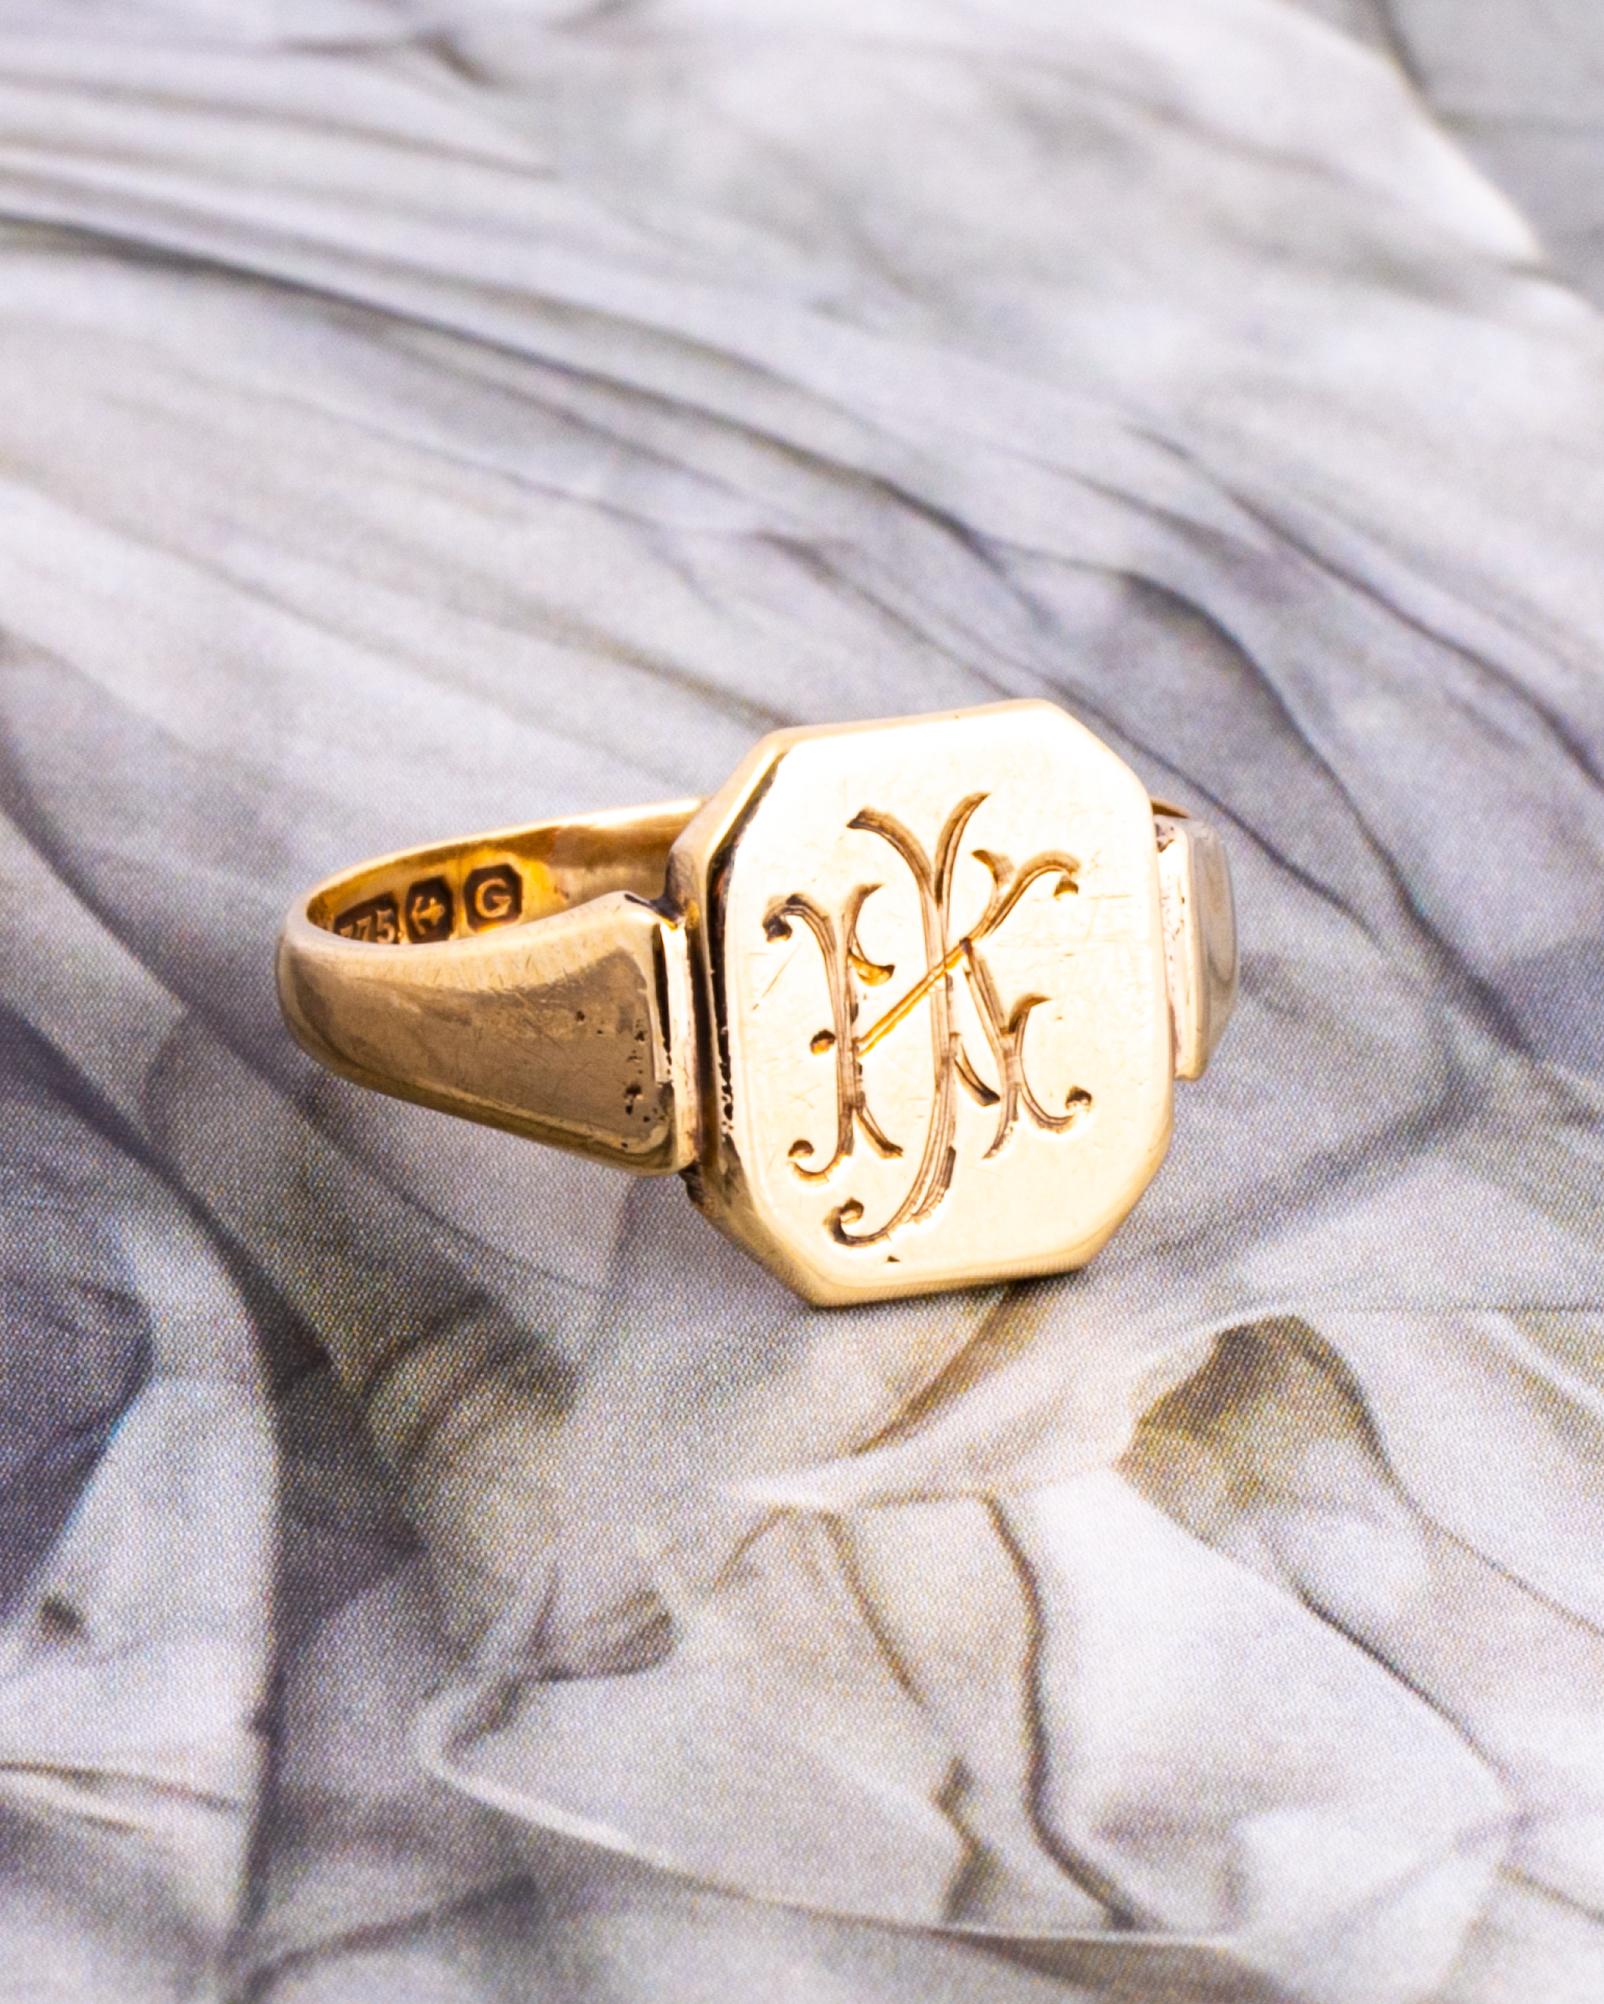 Women's or Men's Antique 9 Carat Gold Signet Ring